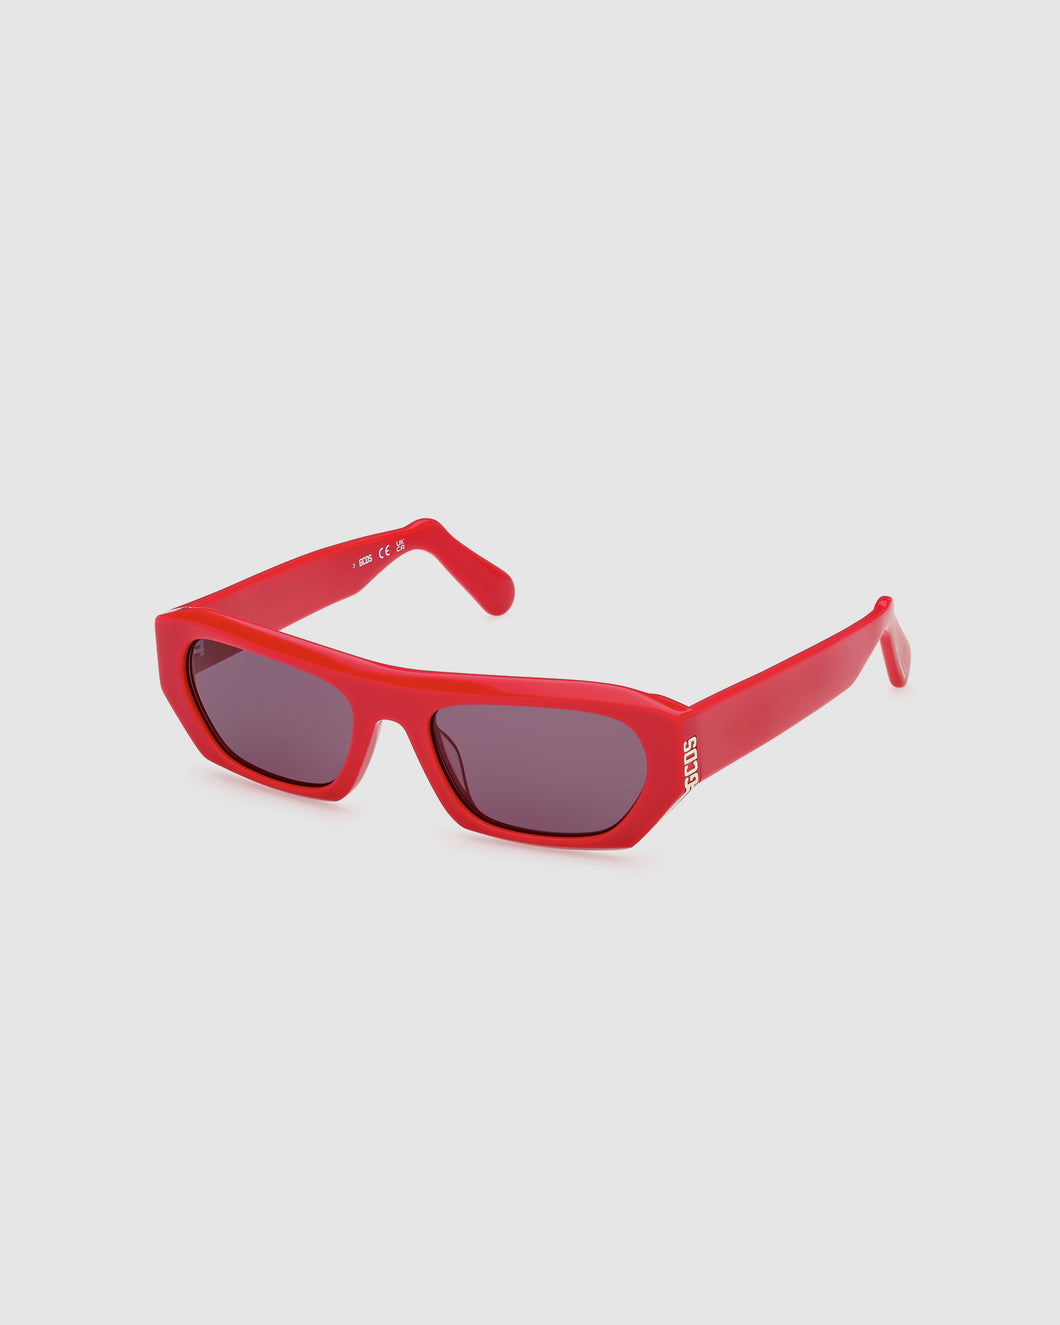 GD0029 Geometric sunglasses : Unisex Sunglasses Red  | GCDS